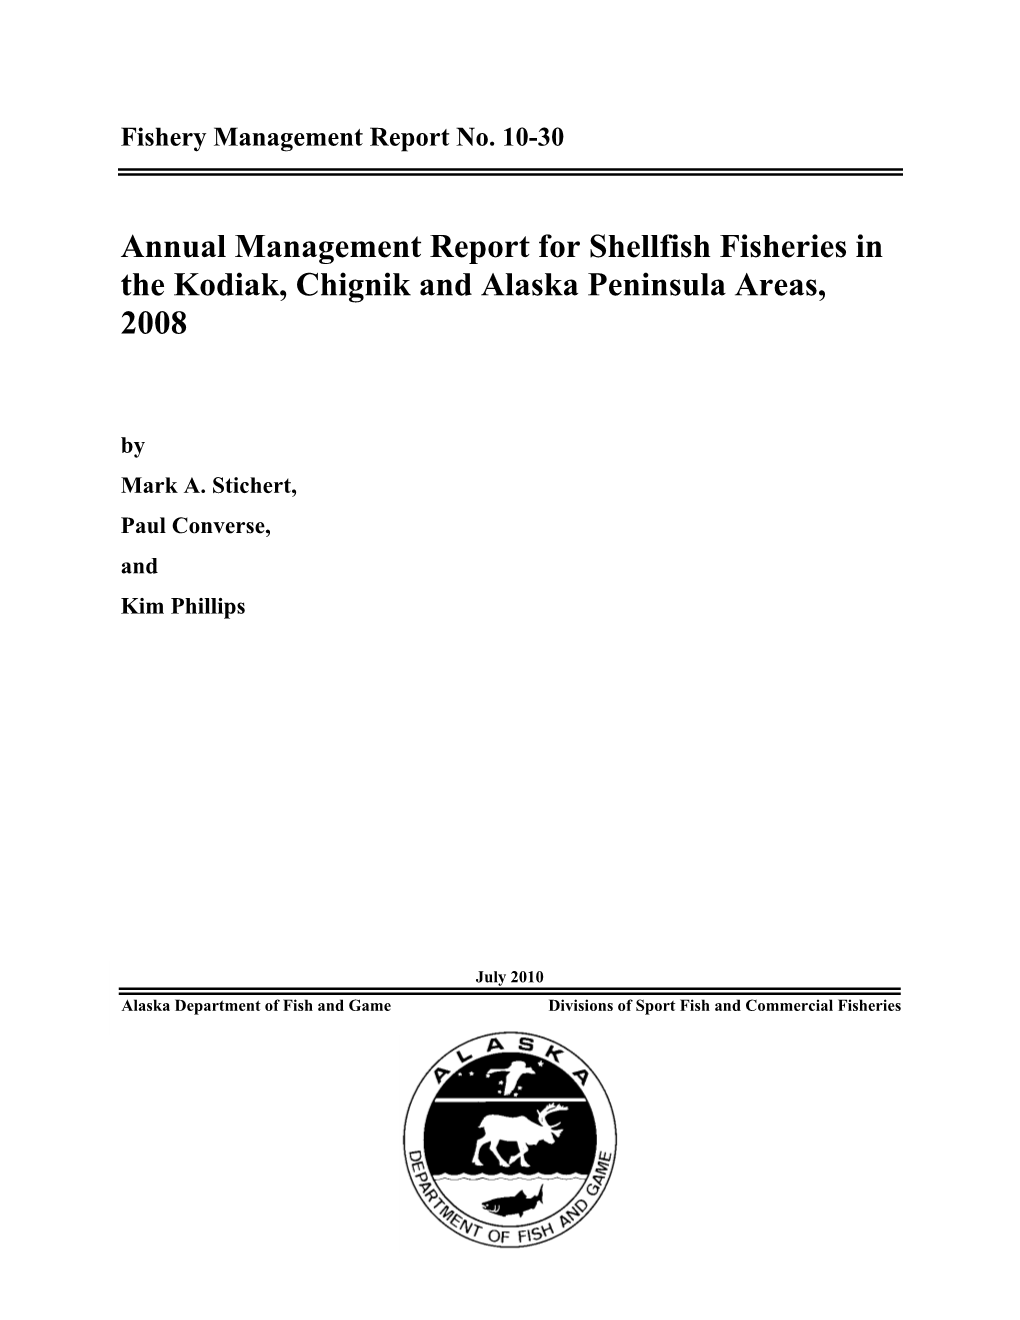 Annual Management Report for Shellfish Fisheries in the Kodiak, Chignik and Alaska Peninsula Areas, 2008